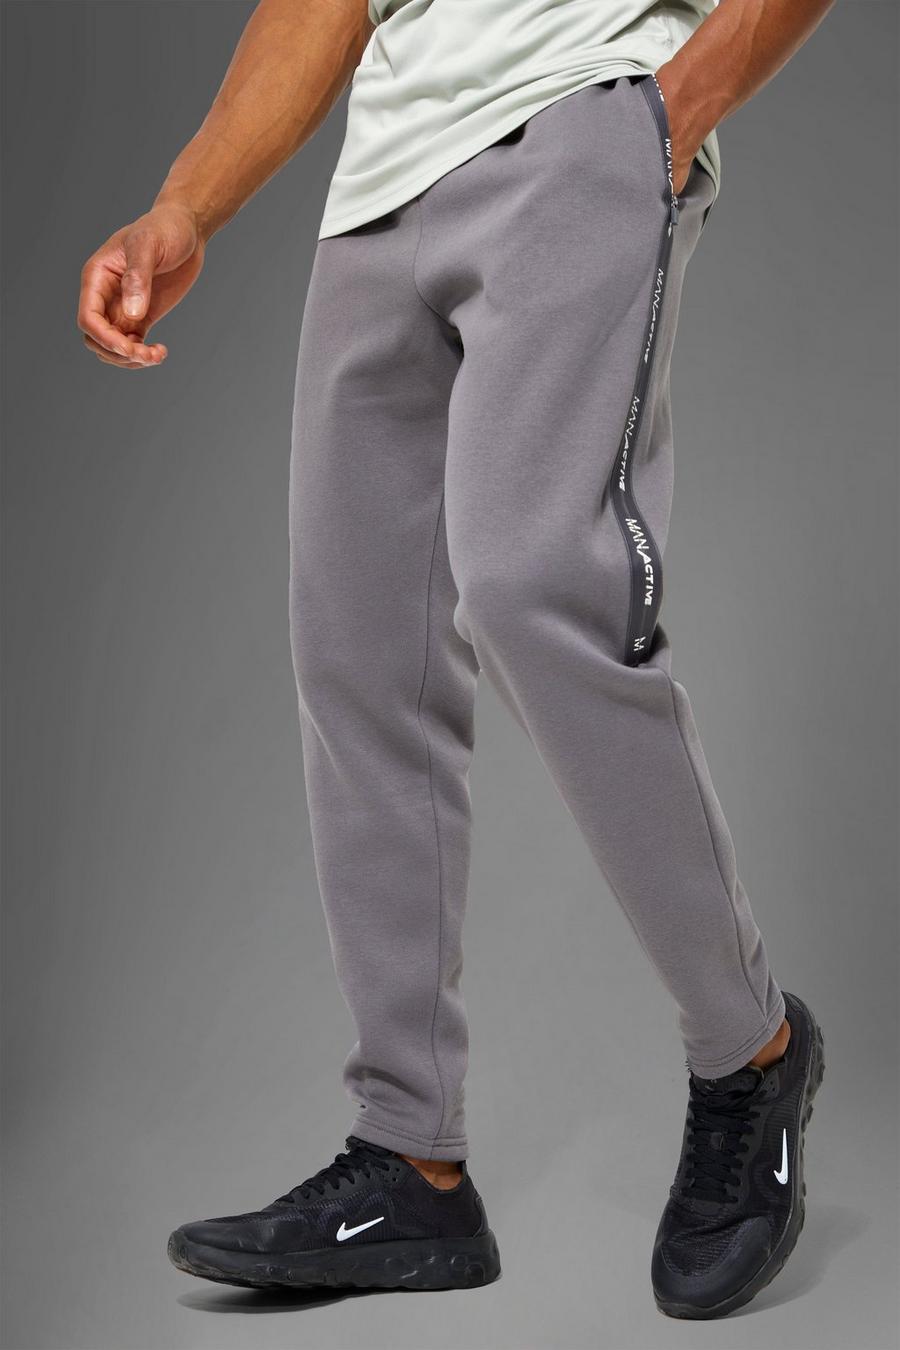 Pantaloni tuta Man Active Gym con zip, Charcoal gris